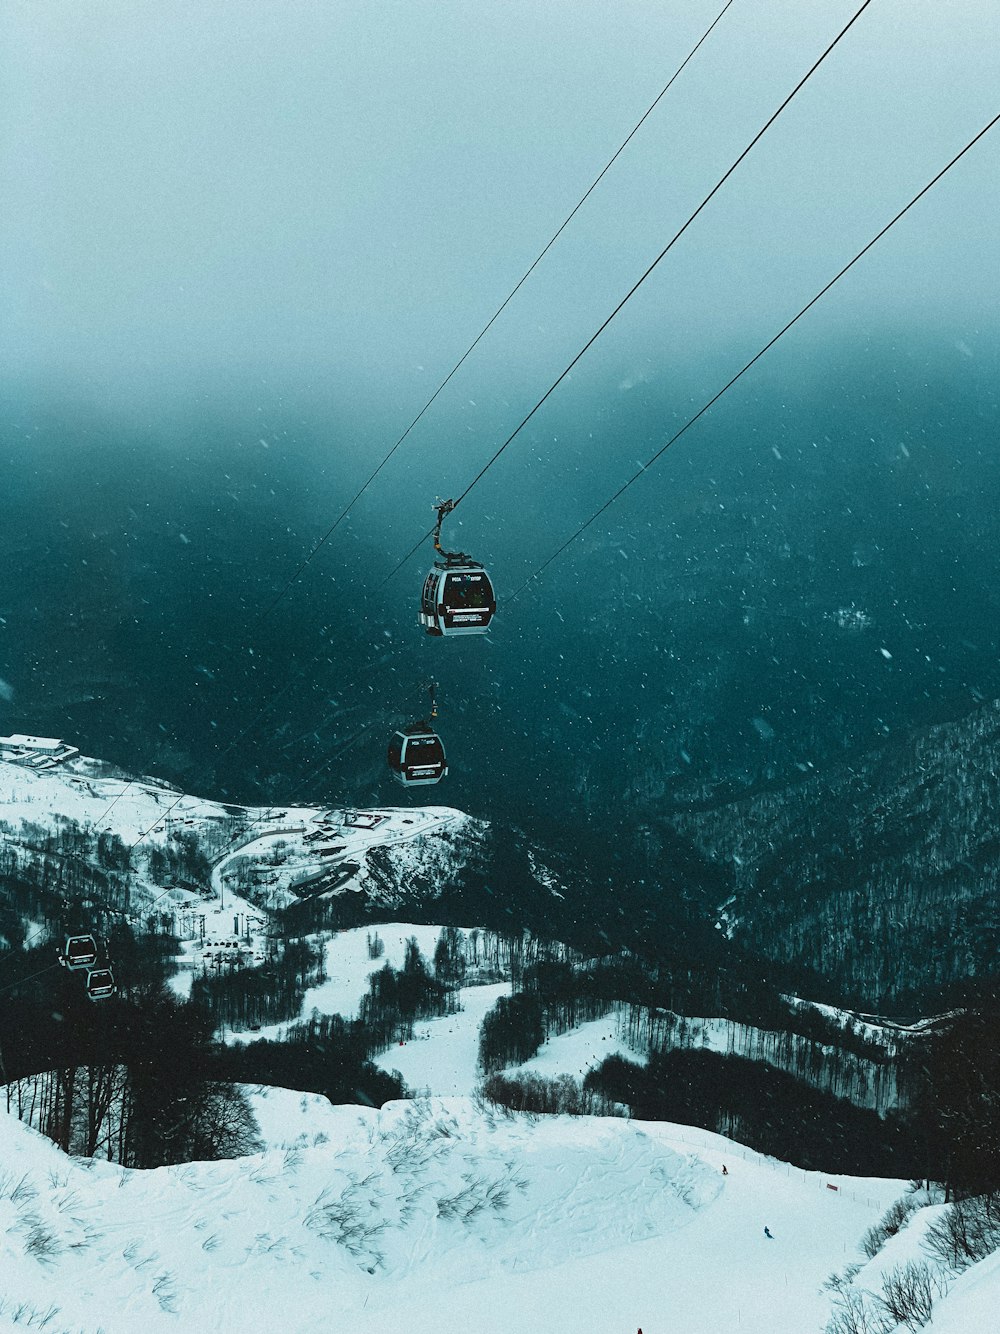 a ski lift going up a mountain